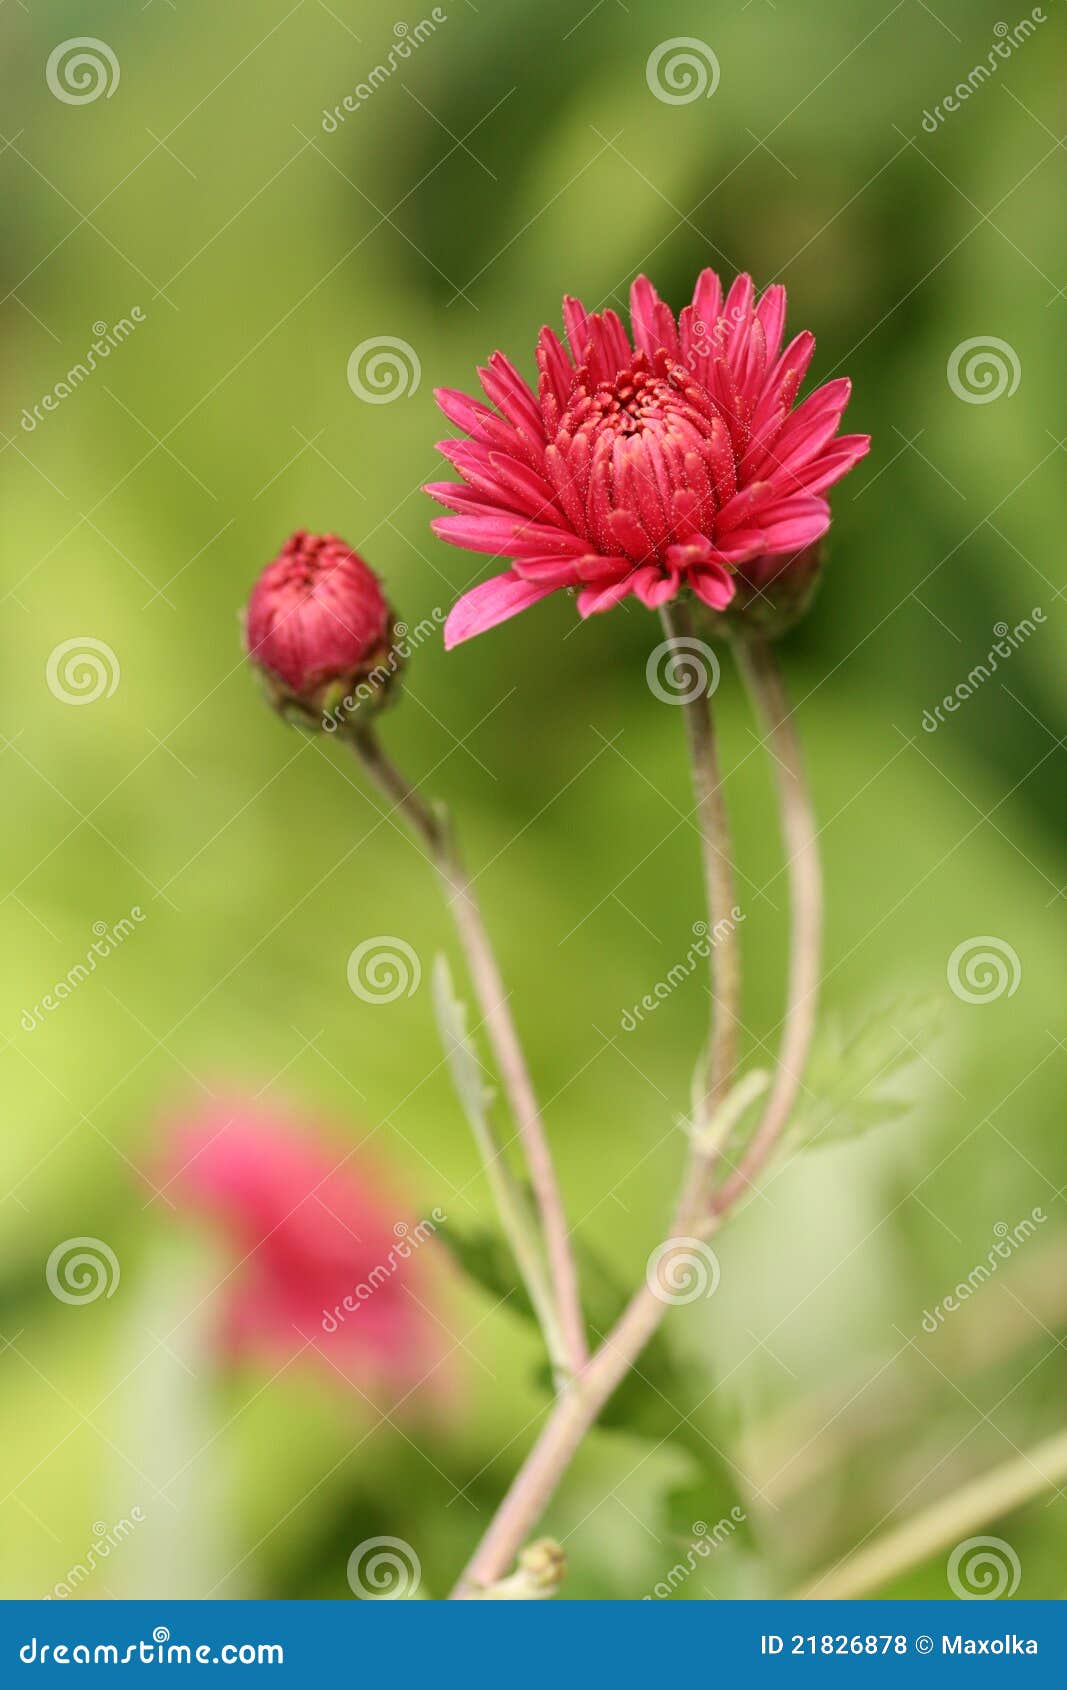 Bud of chrysanthemum stock photo. Image of flower, small - 21826878